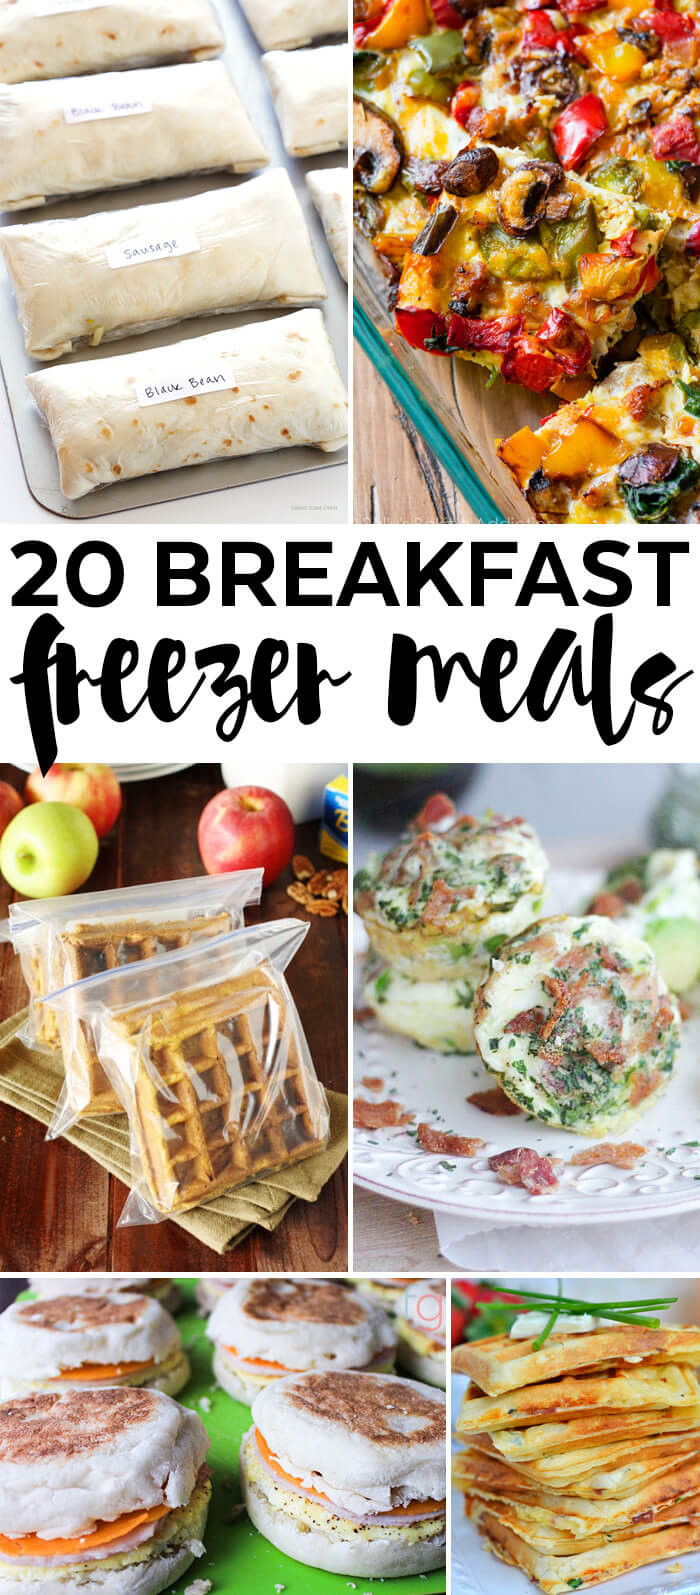 Freezer Breakfast Recipes
 20 Freezer Meals to Stock your Freezer with Breakfasts